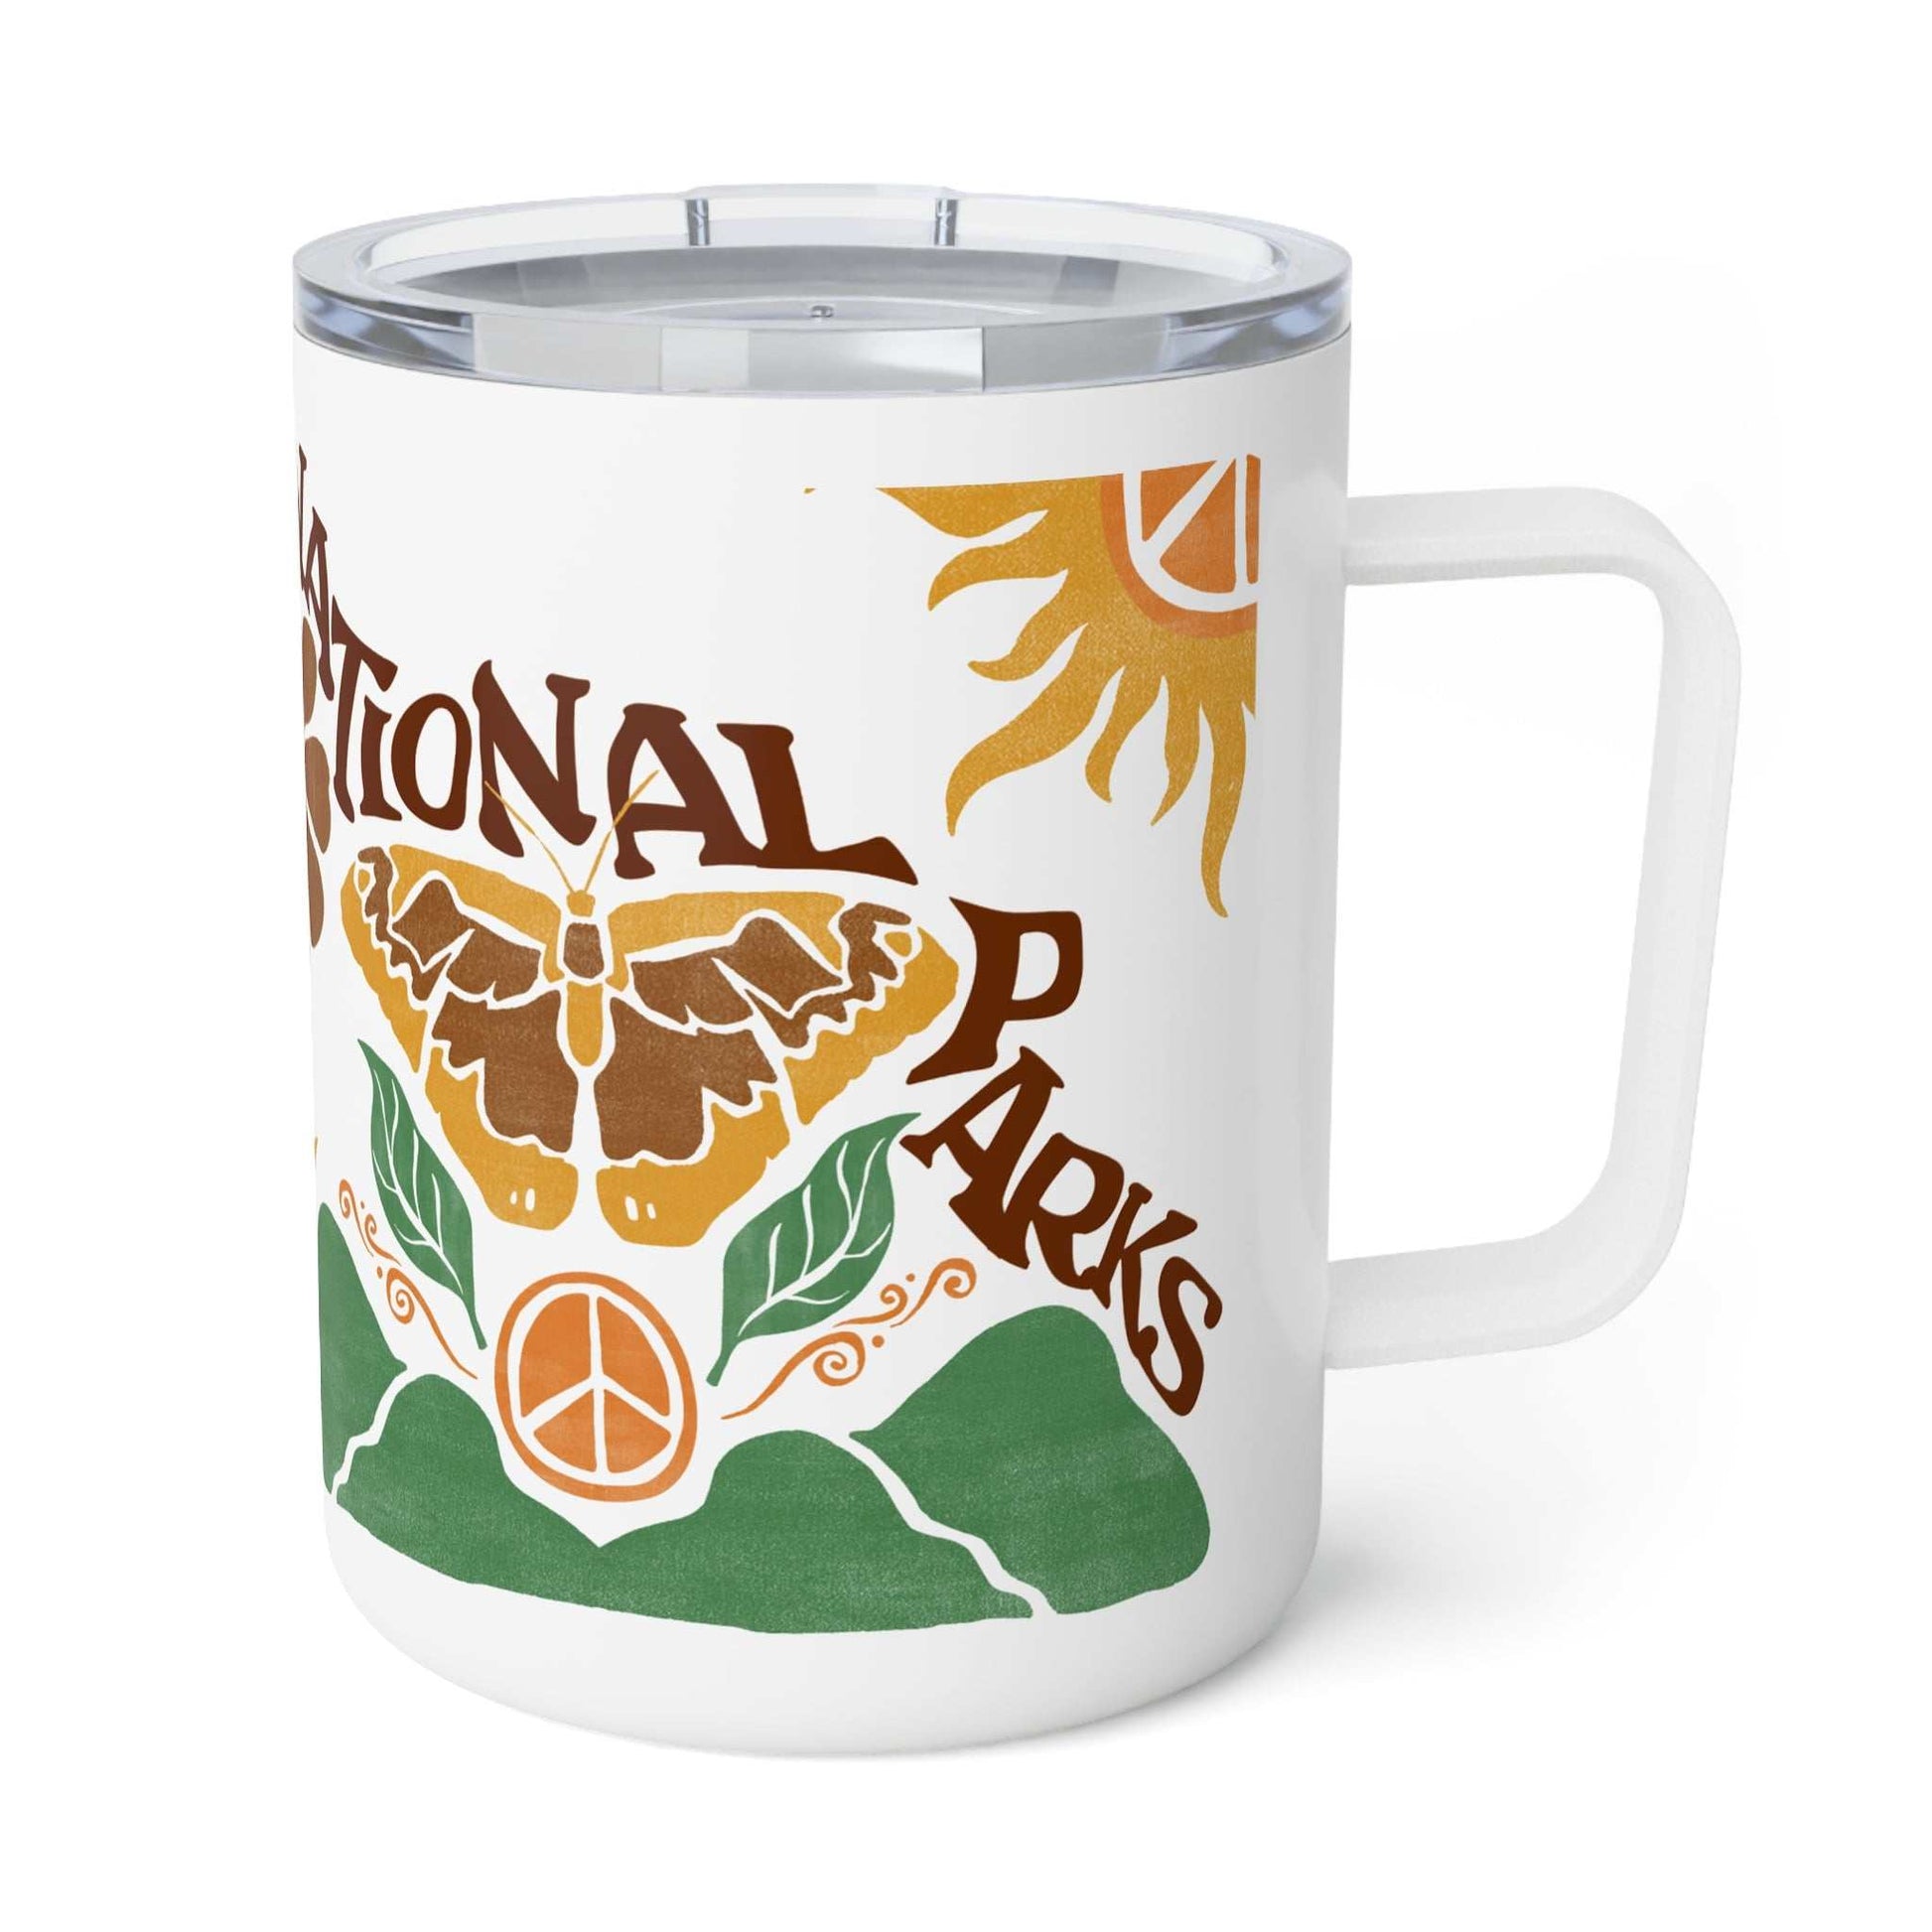 Take Me to the National Parks Insulated Coffee Mug